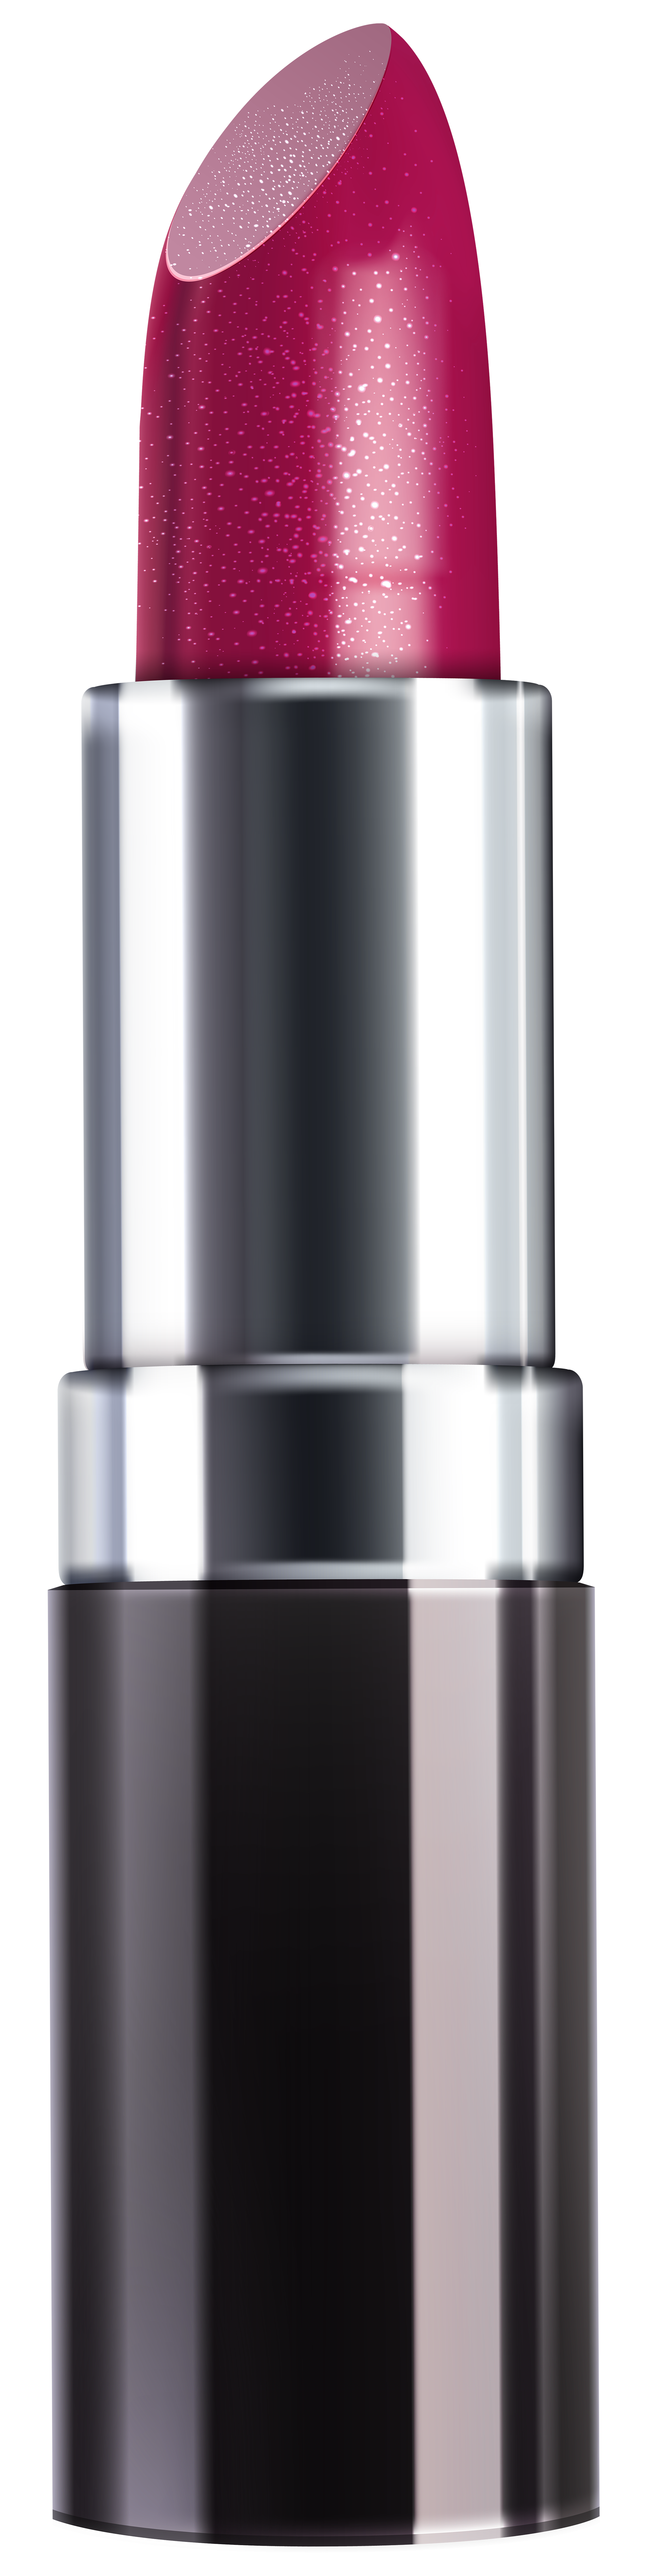 Lipstick PNG HD - 147177